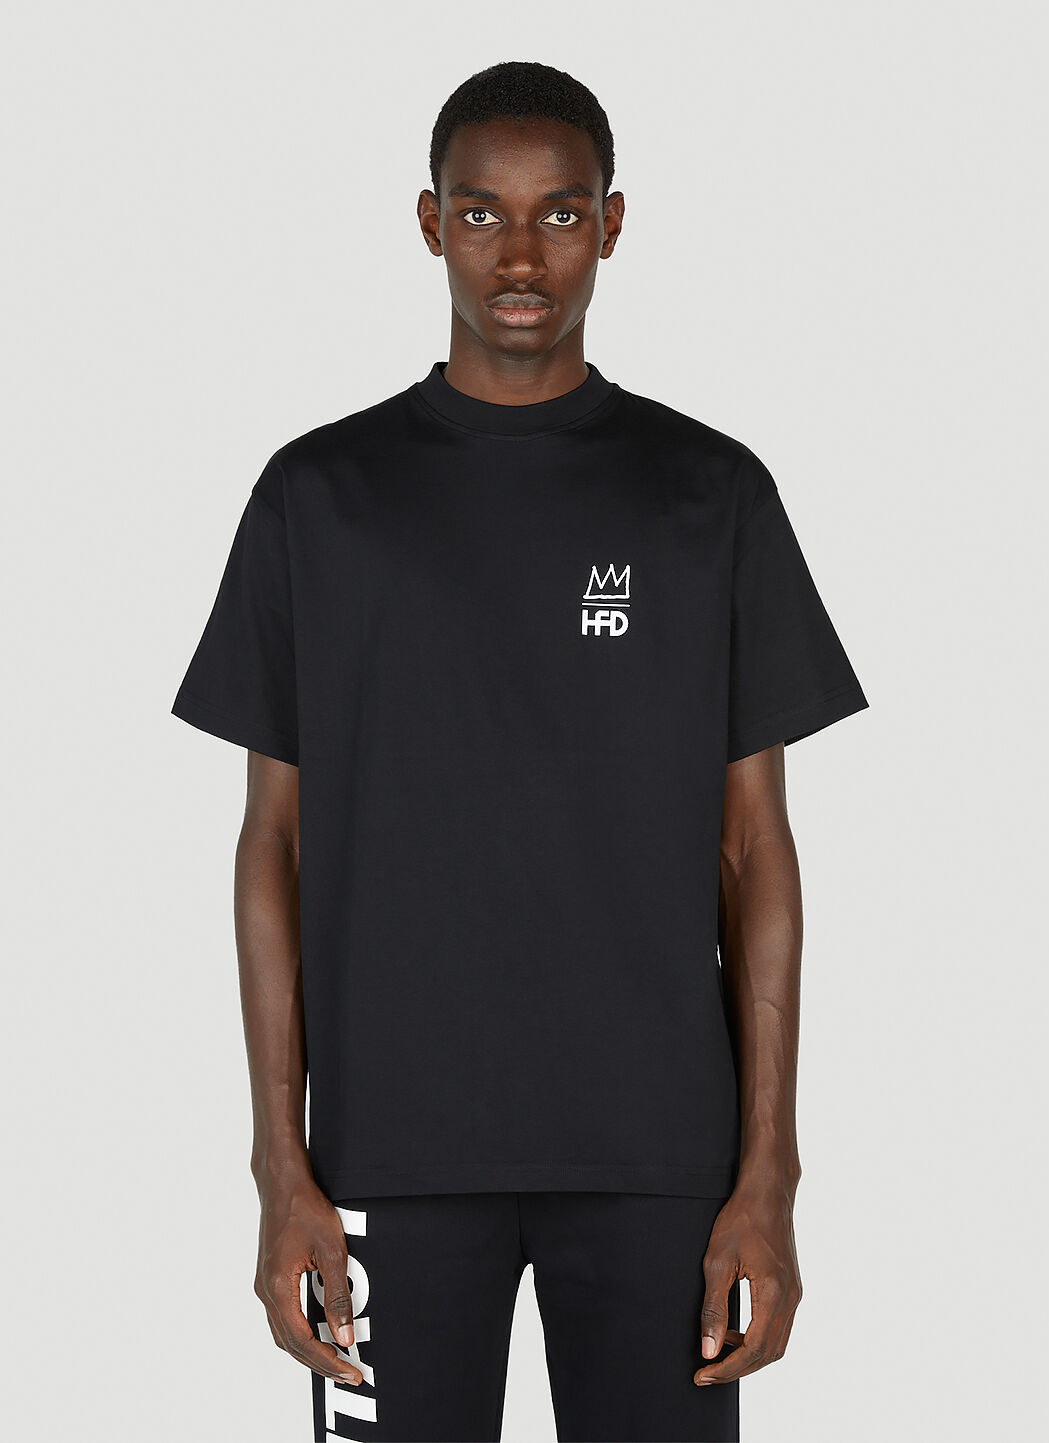 Honey Fucking Dijon Basquiat T-Shirt White hdj0352018